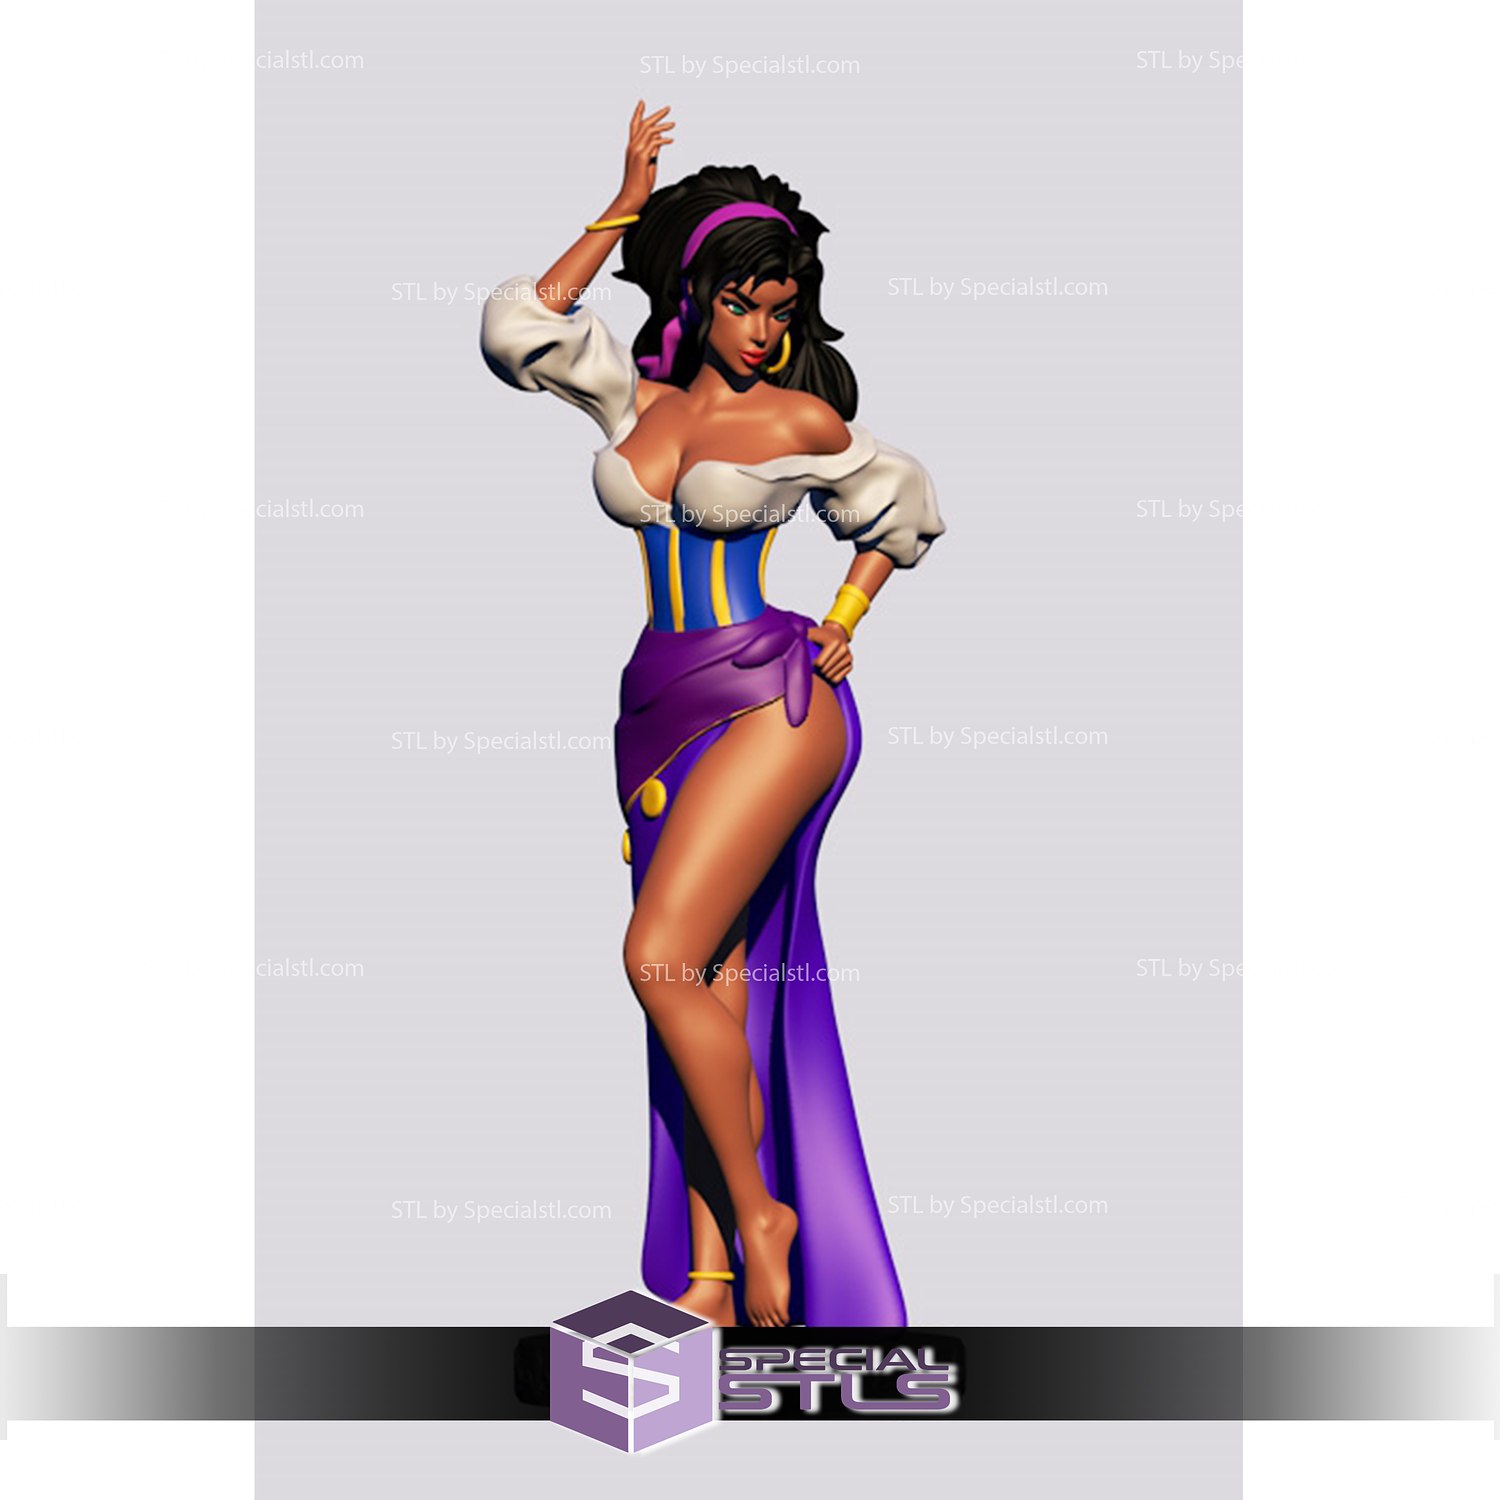 Esmeralda from Disney